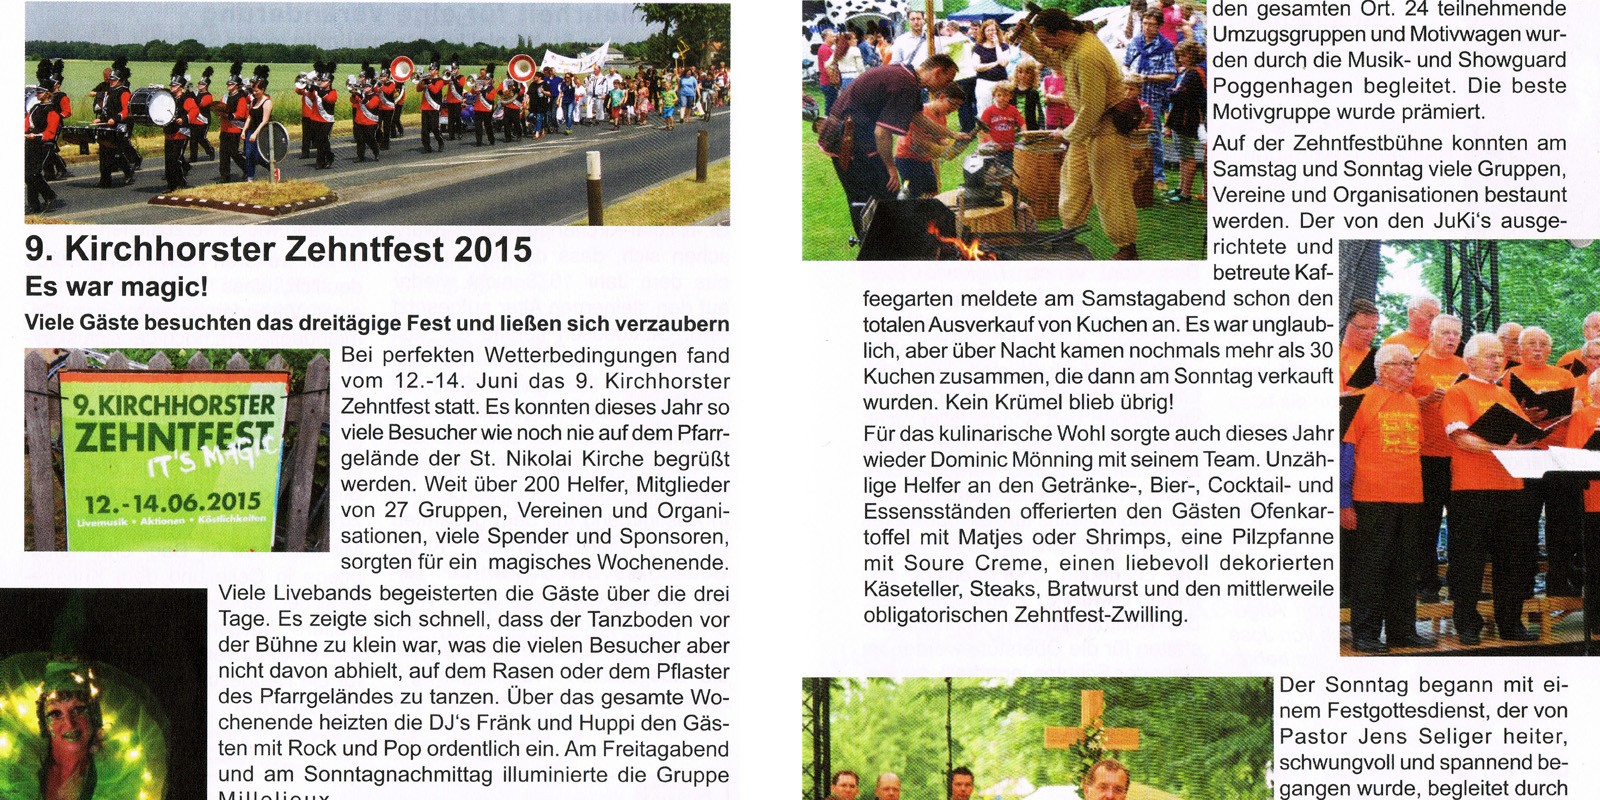 9. Kirchhorster Zehntfest 2015 – Es war magic!